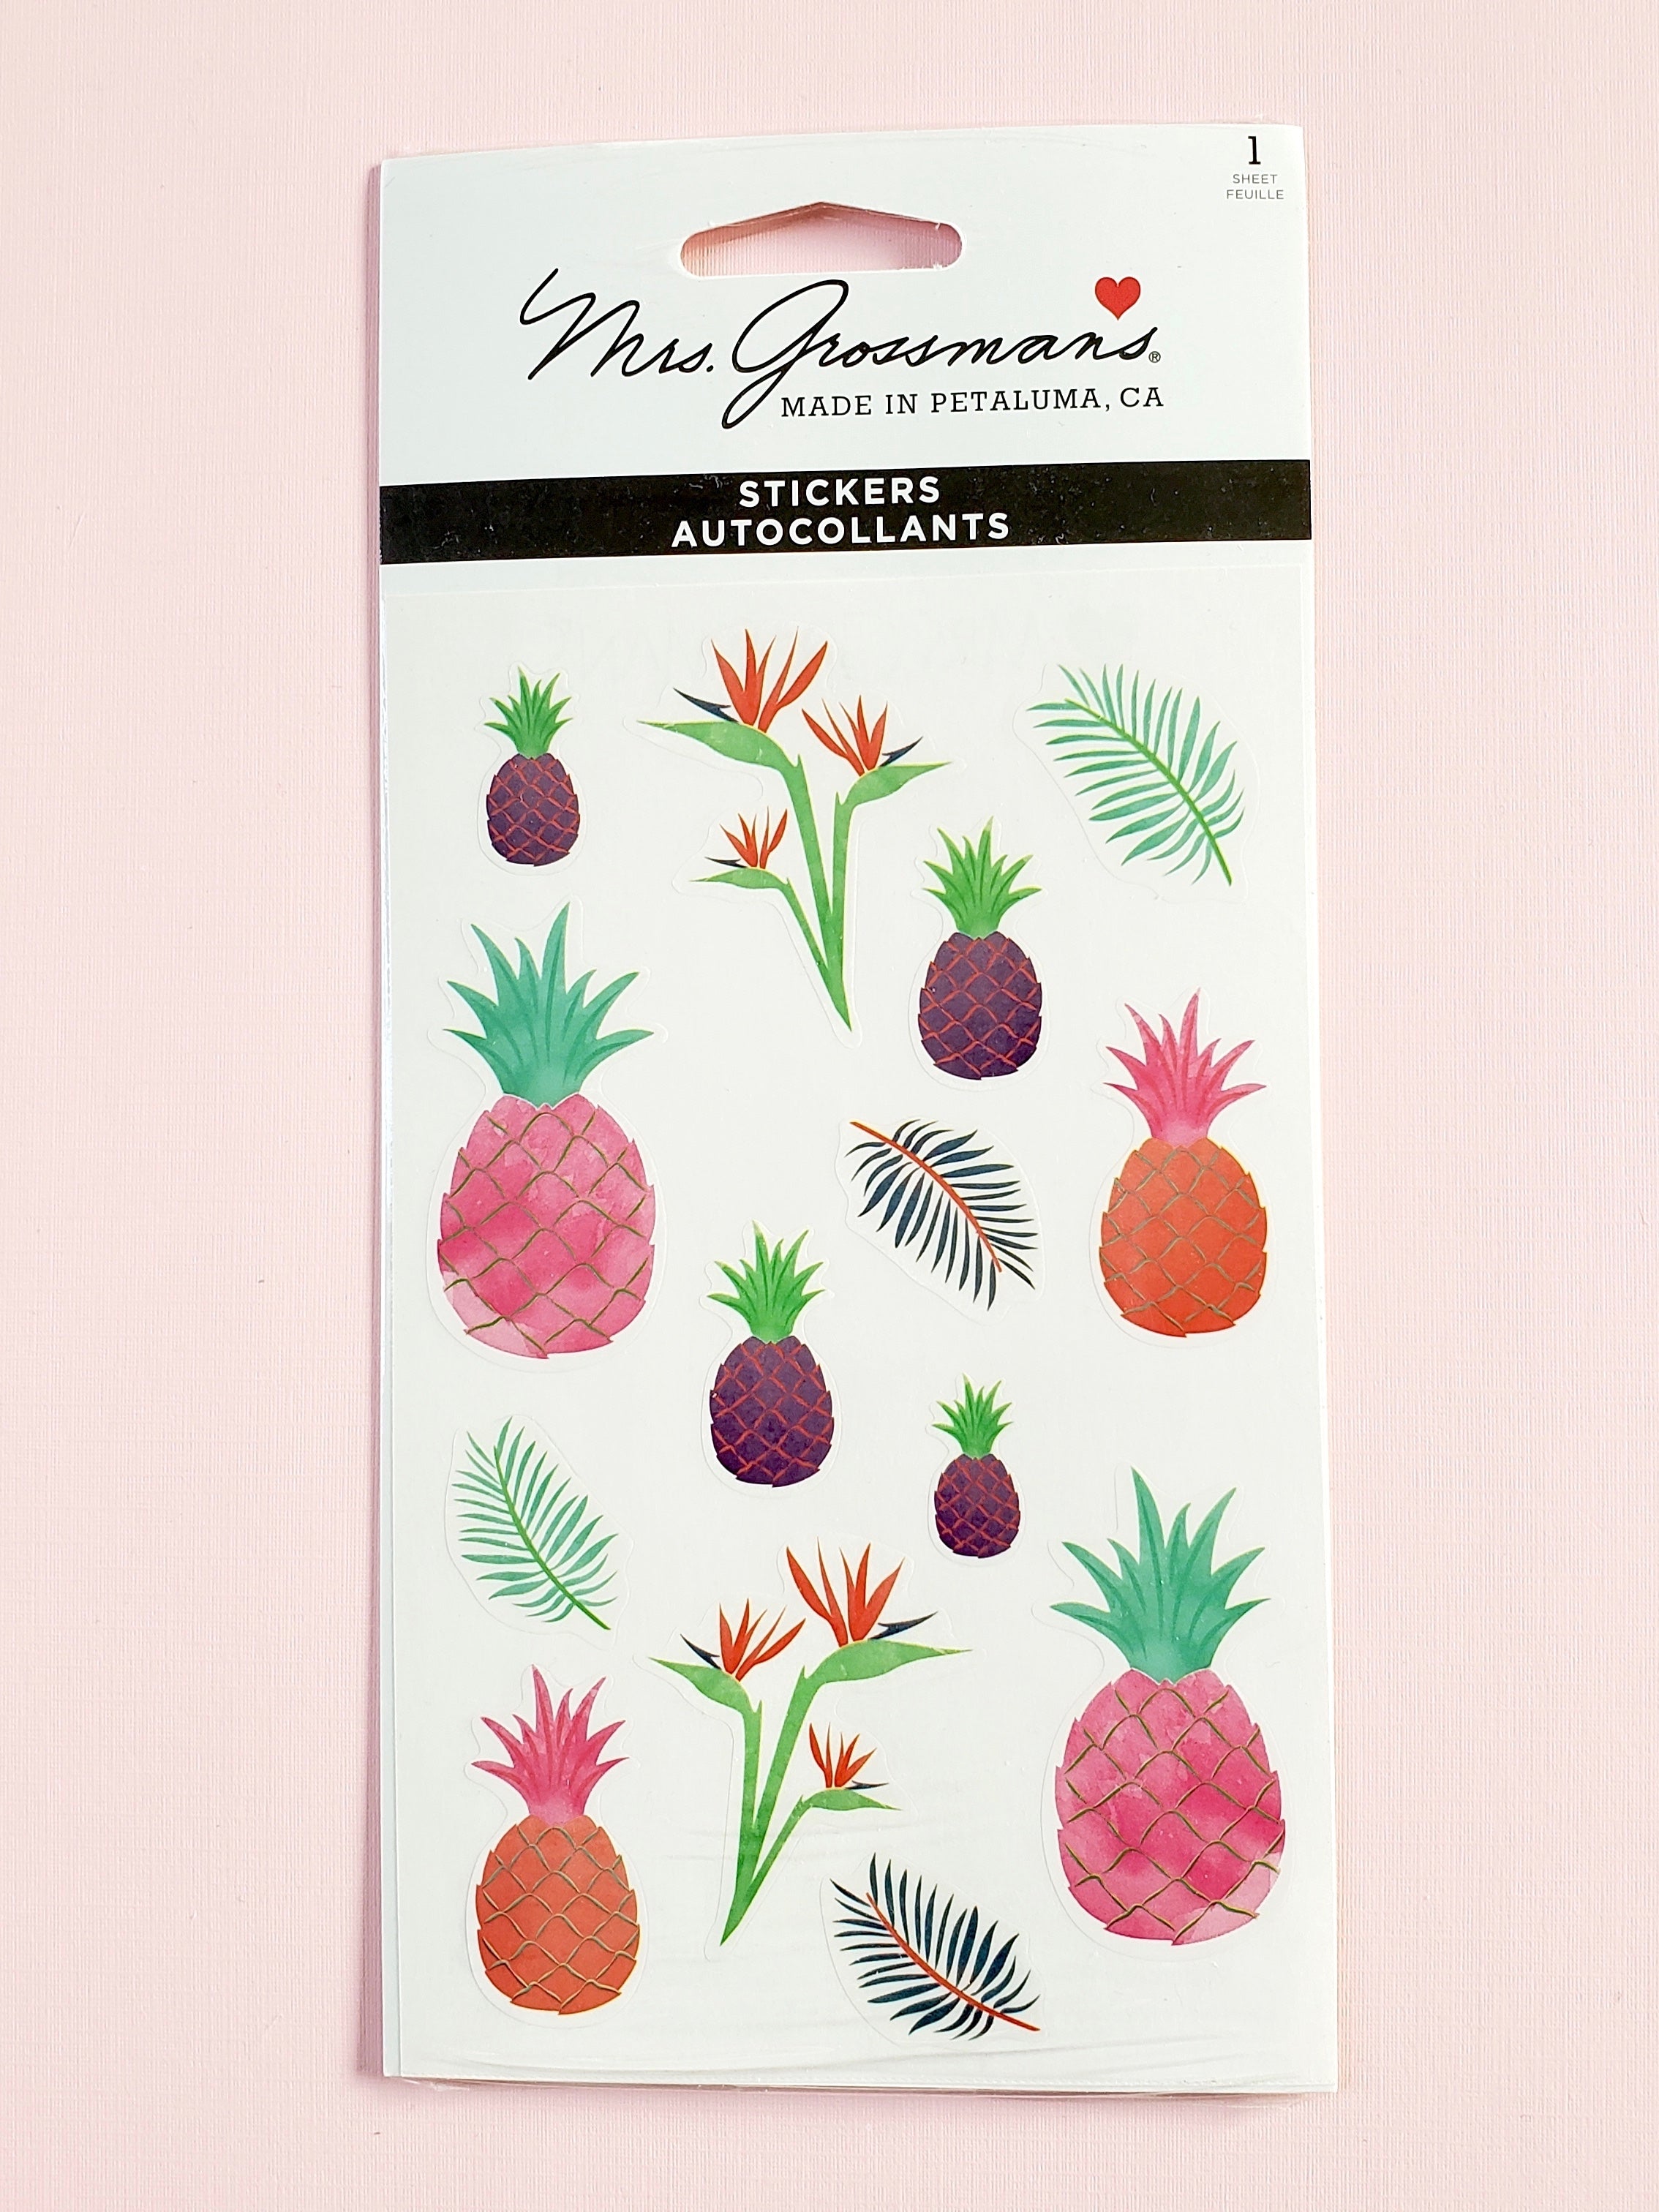 Mrs Grossman's watercolor pineapple stickers